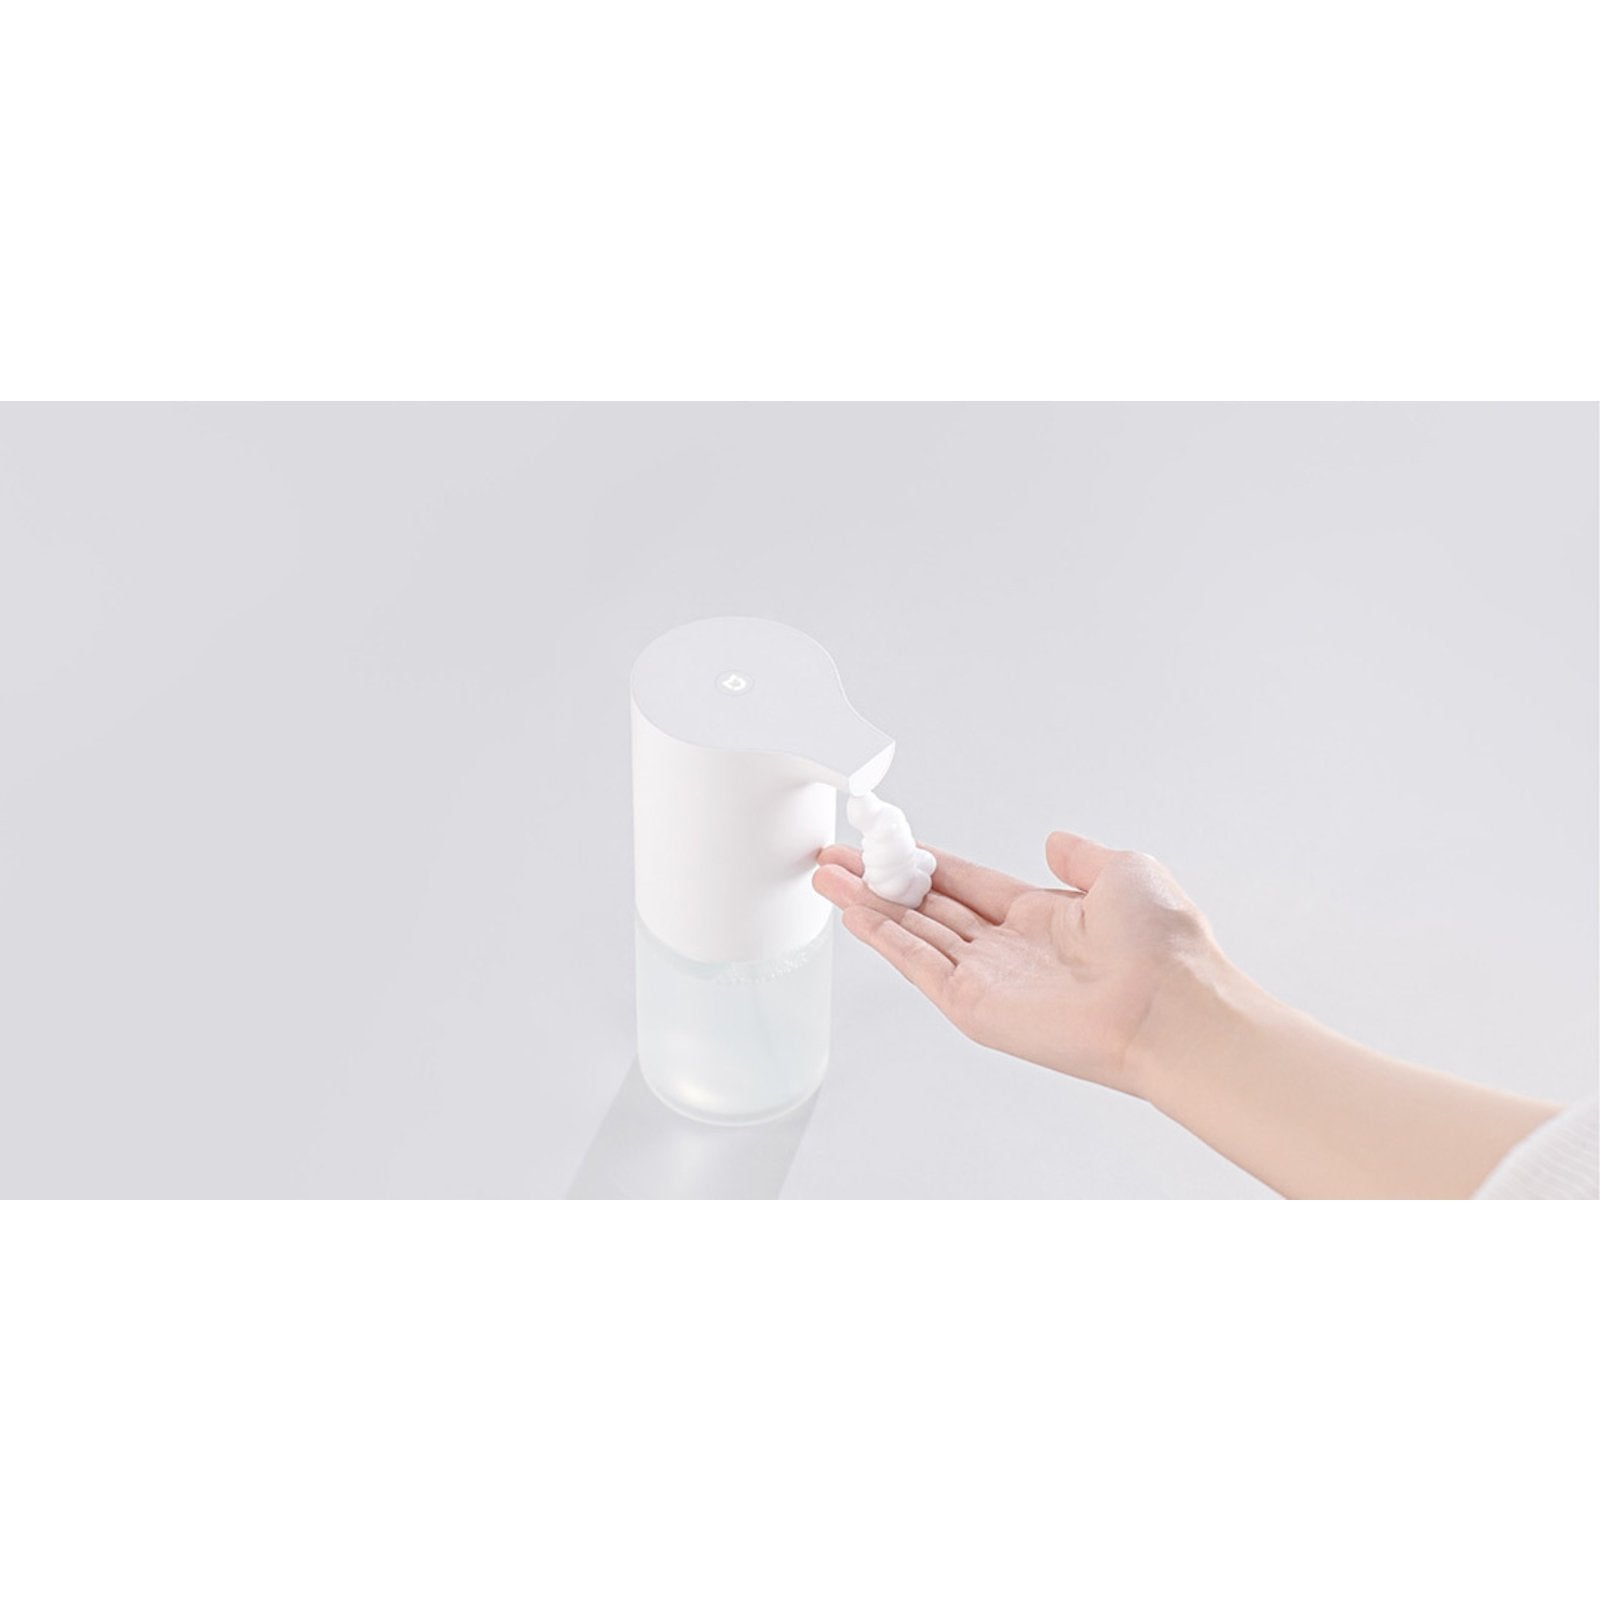 xiaomi-mi-automatic-foaming-soap-dispenser